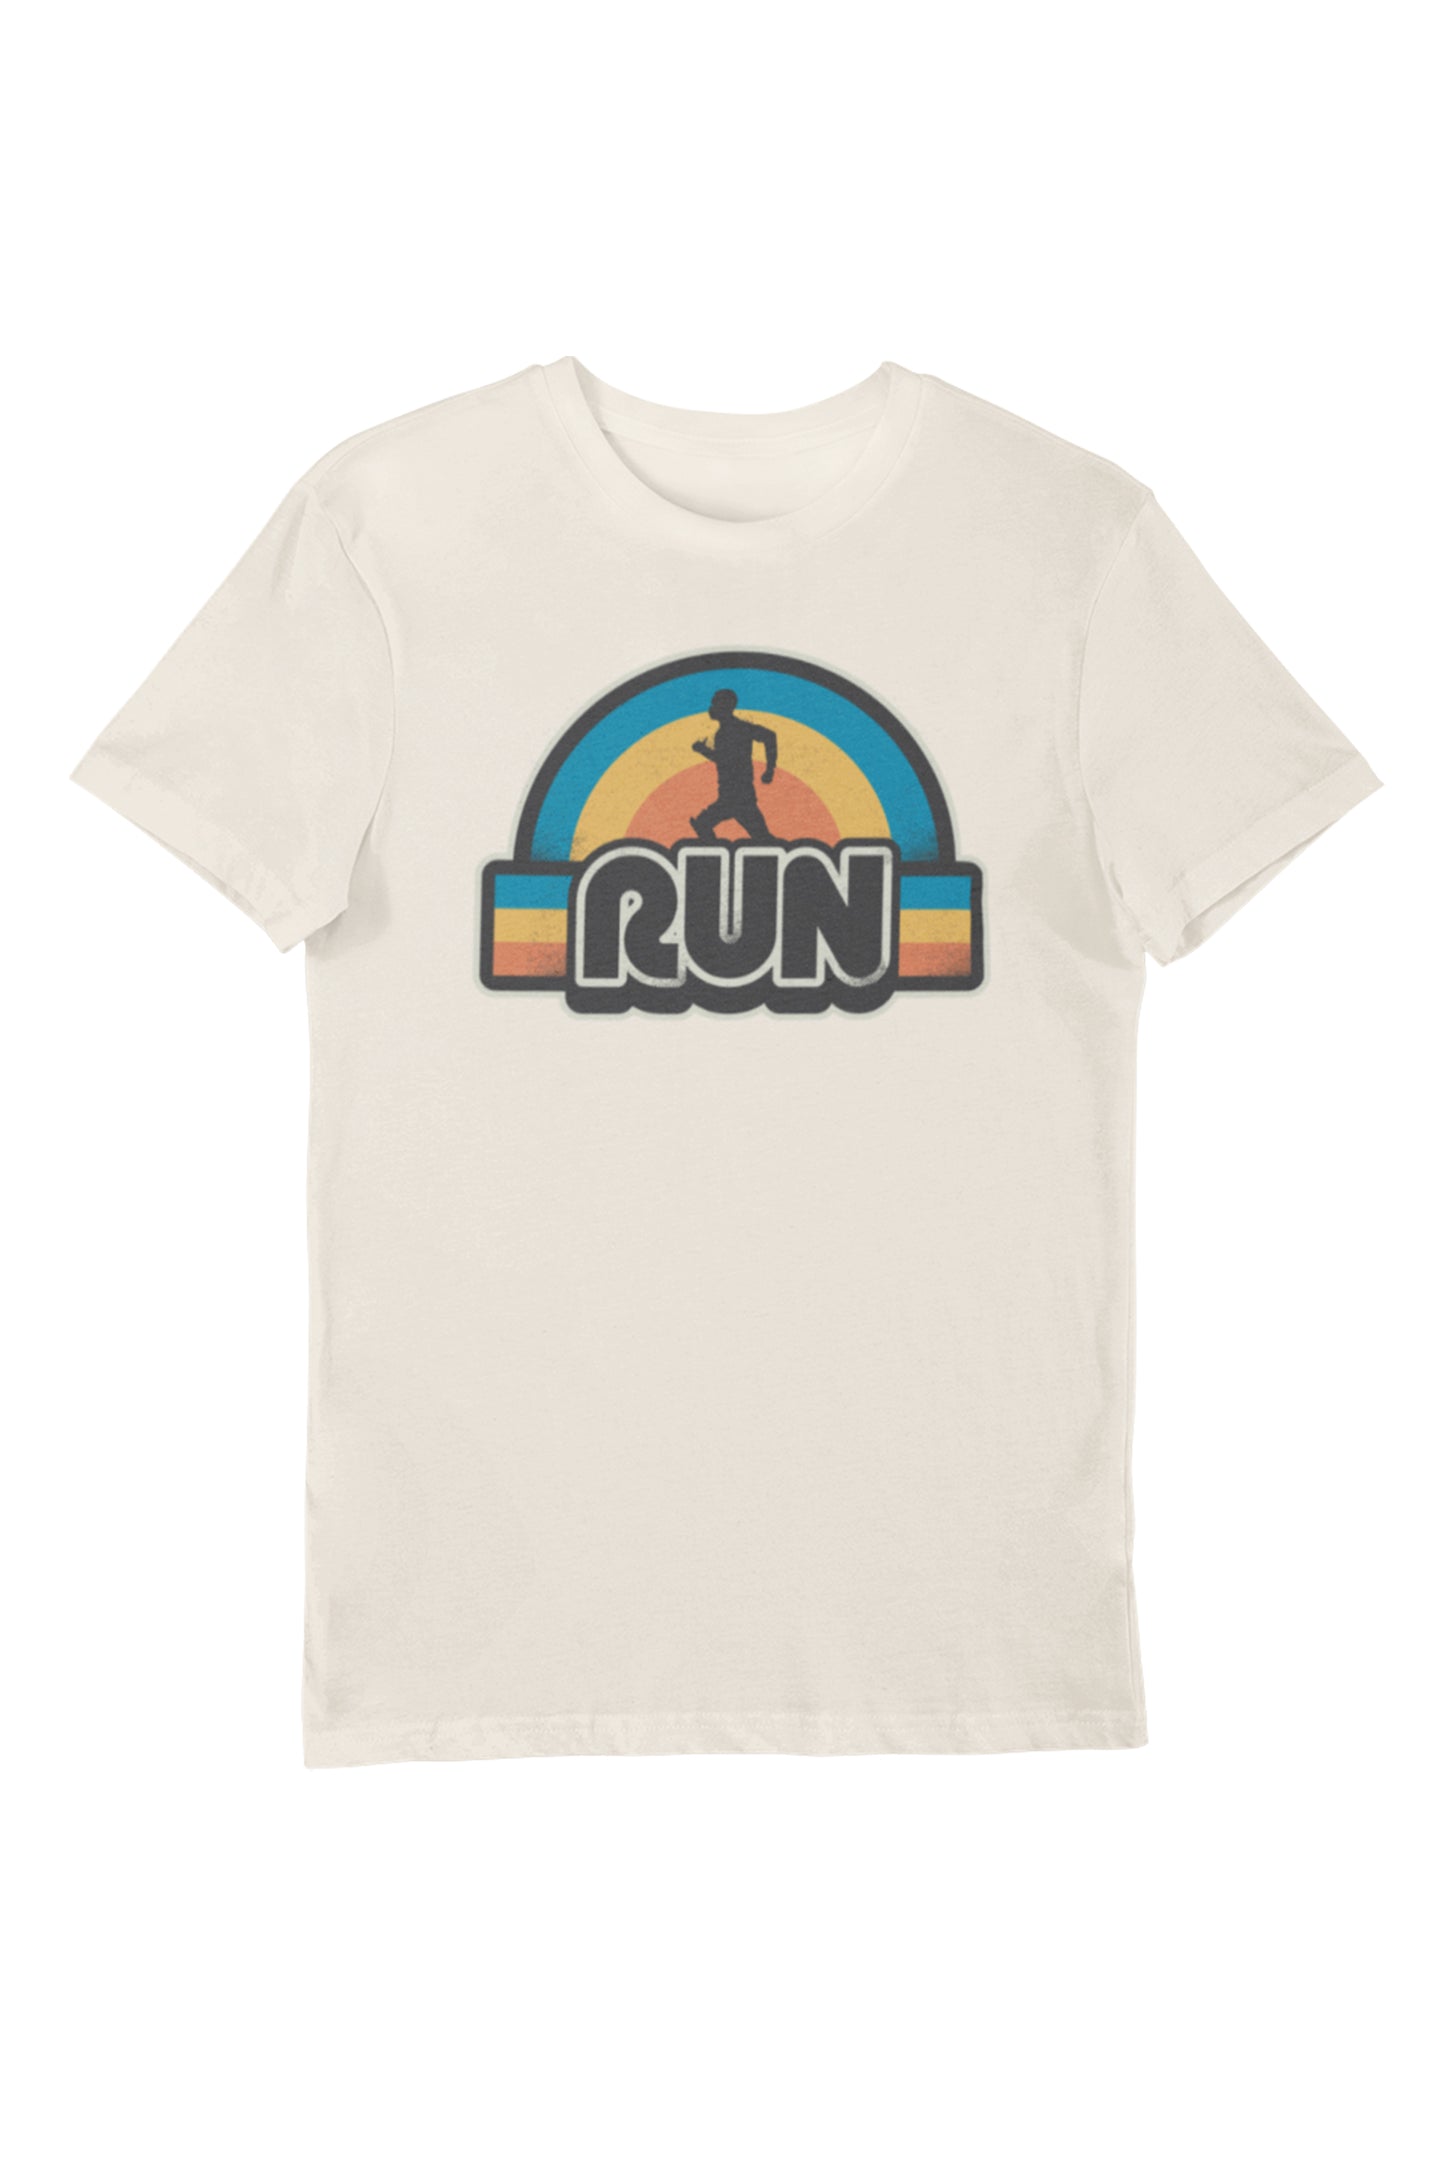 Run - Women's